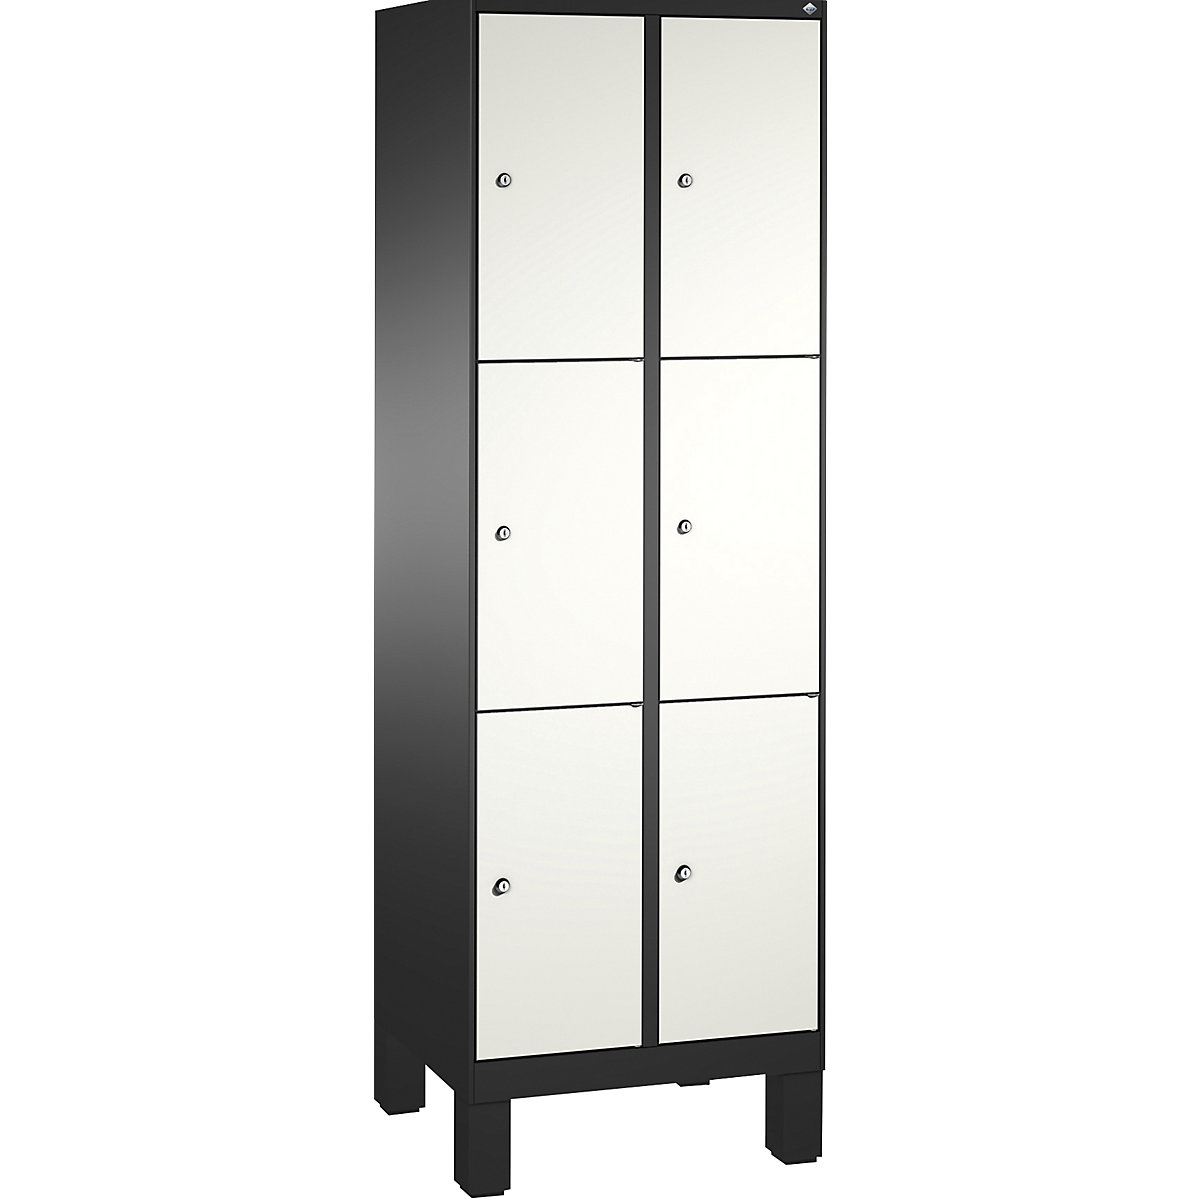 EVOLO locker unit, with feet – C+P, 2 compartments, 3 shelf compartments each, compartment width 300 mm, black grey / traffic white-13